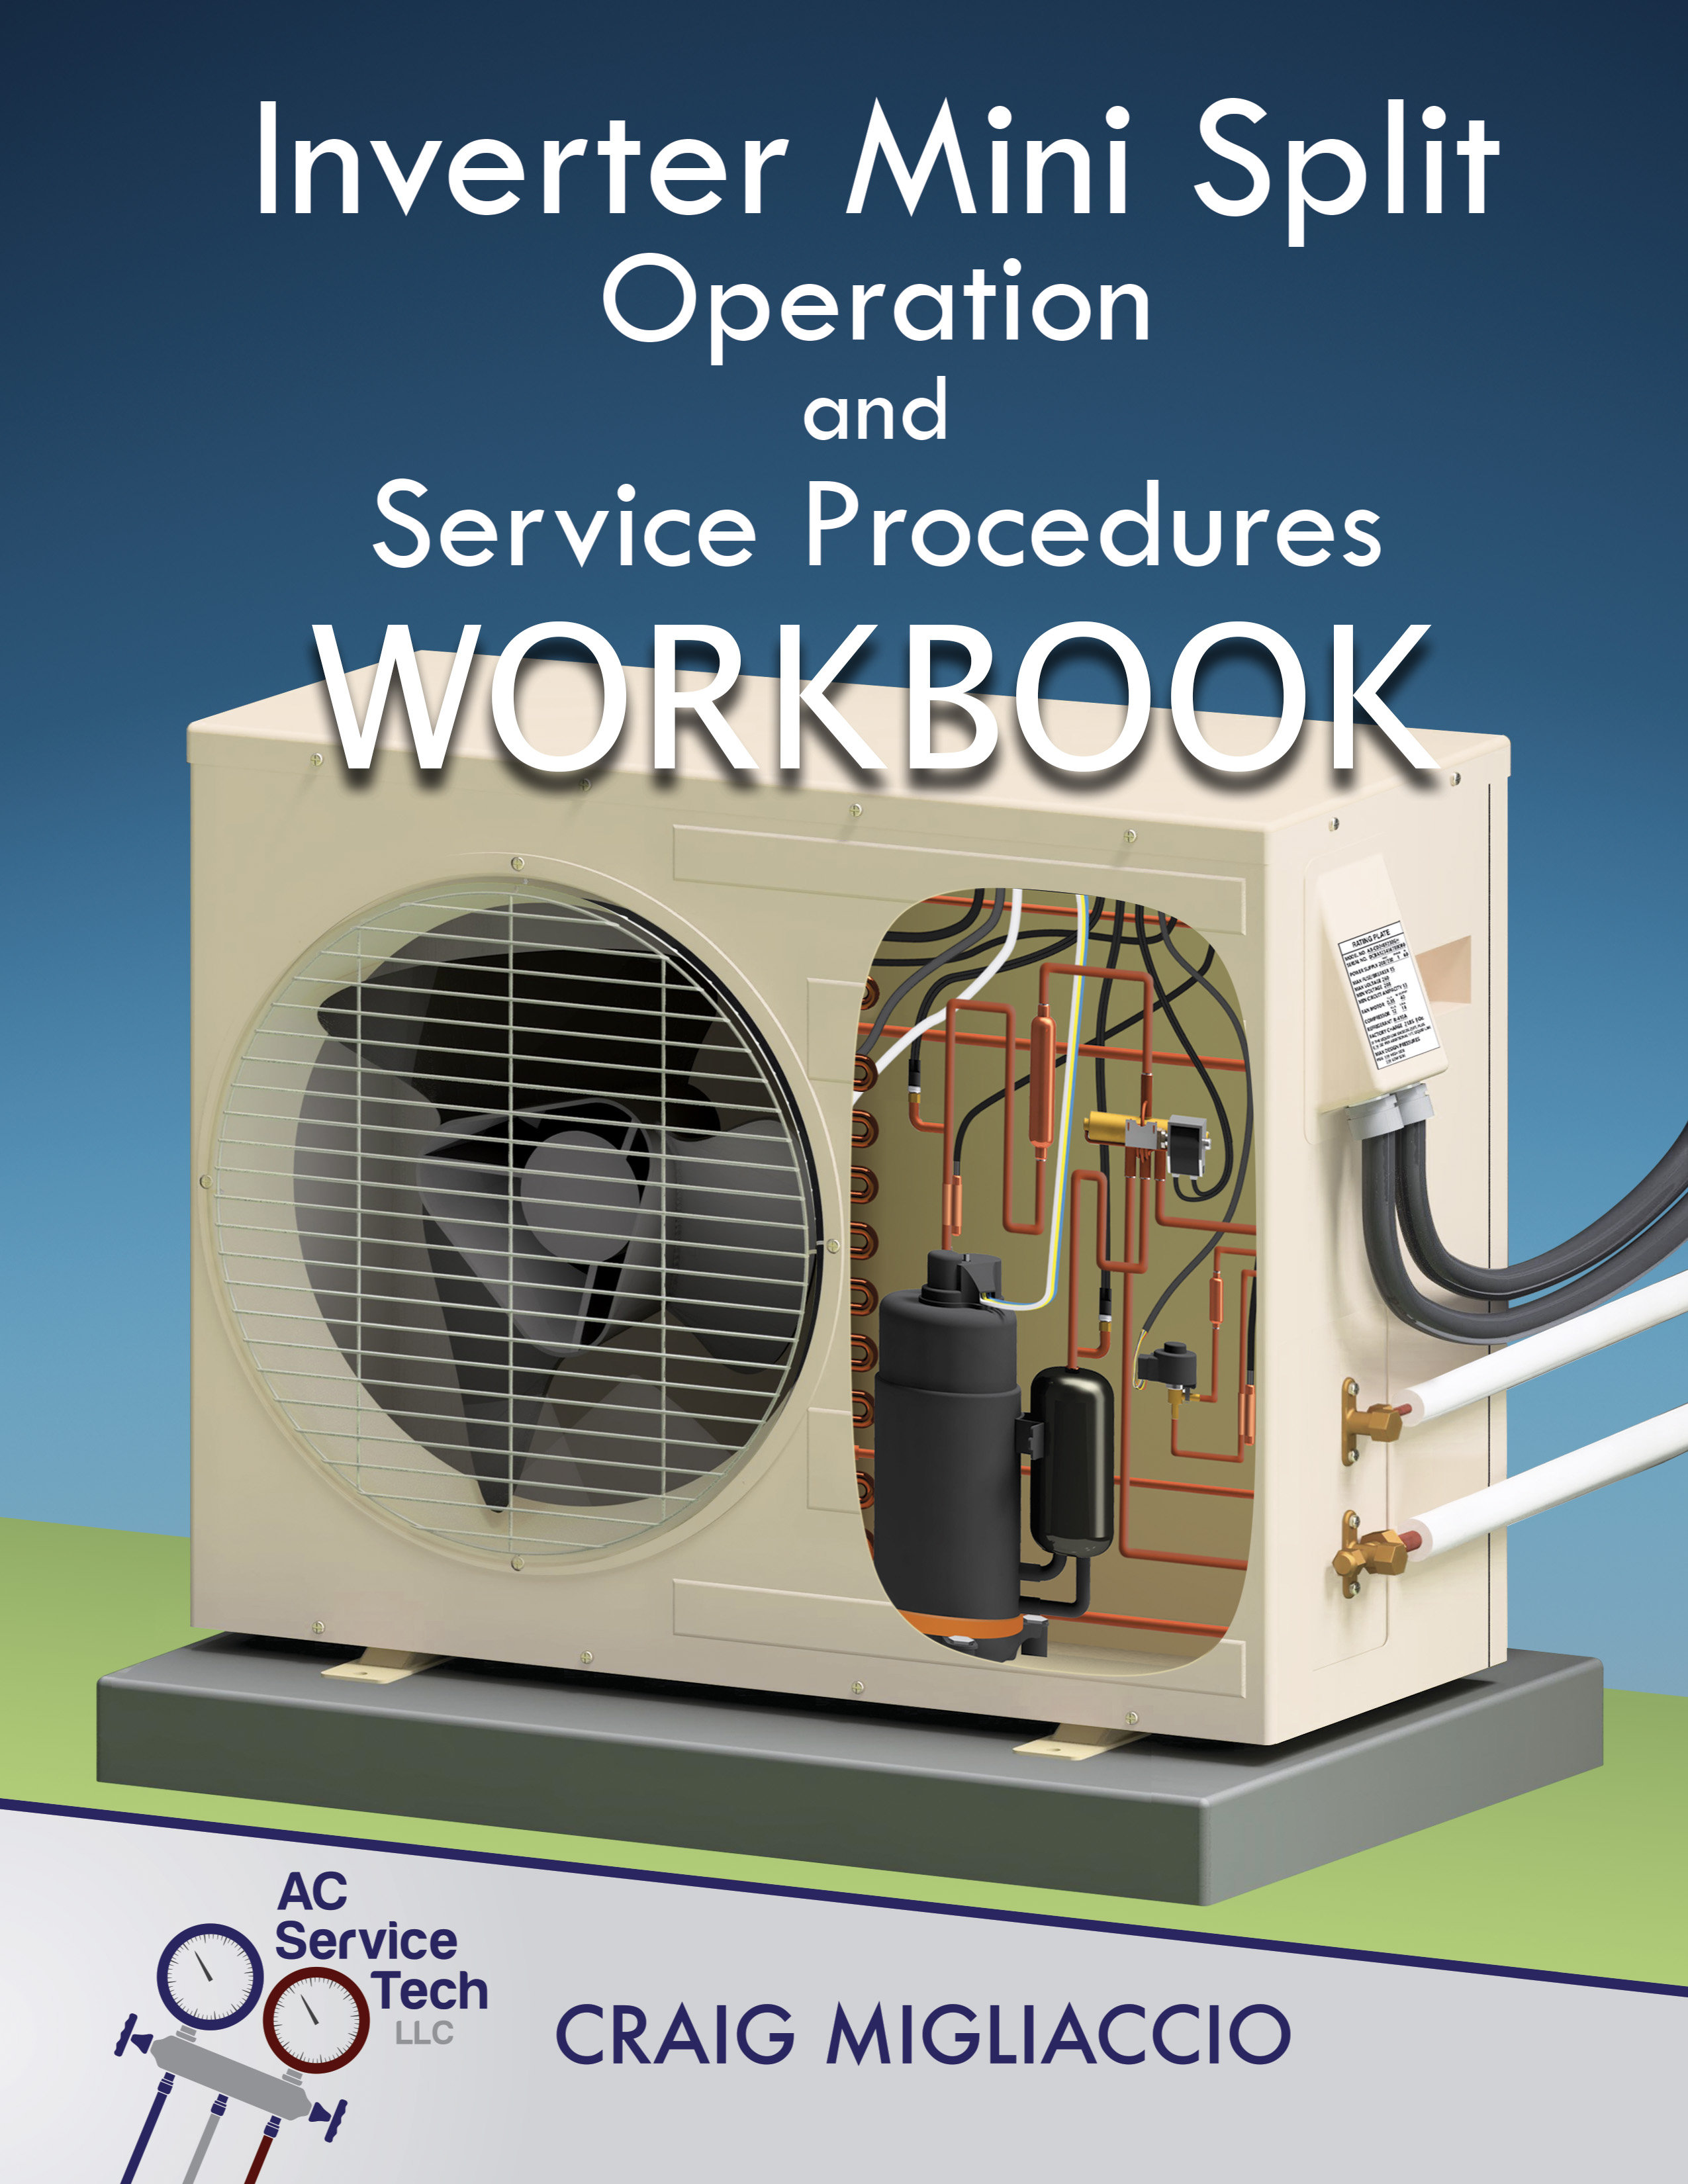 Inverter Mini Split Operation and Service Procedures Workbook